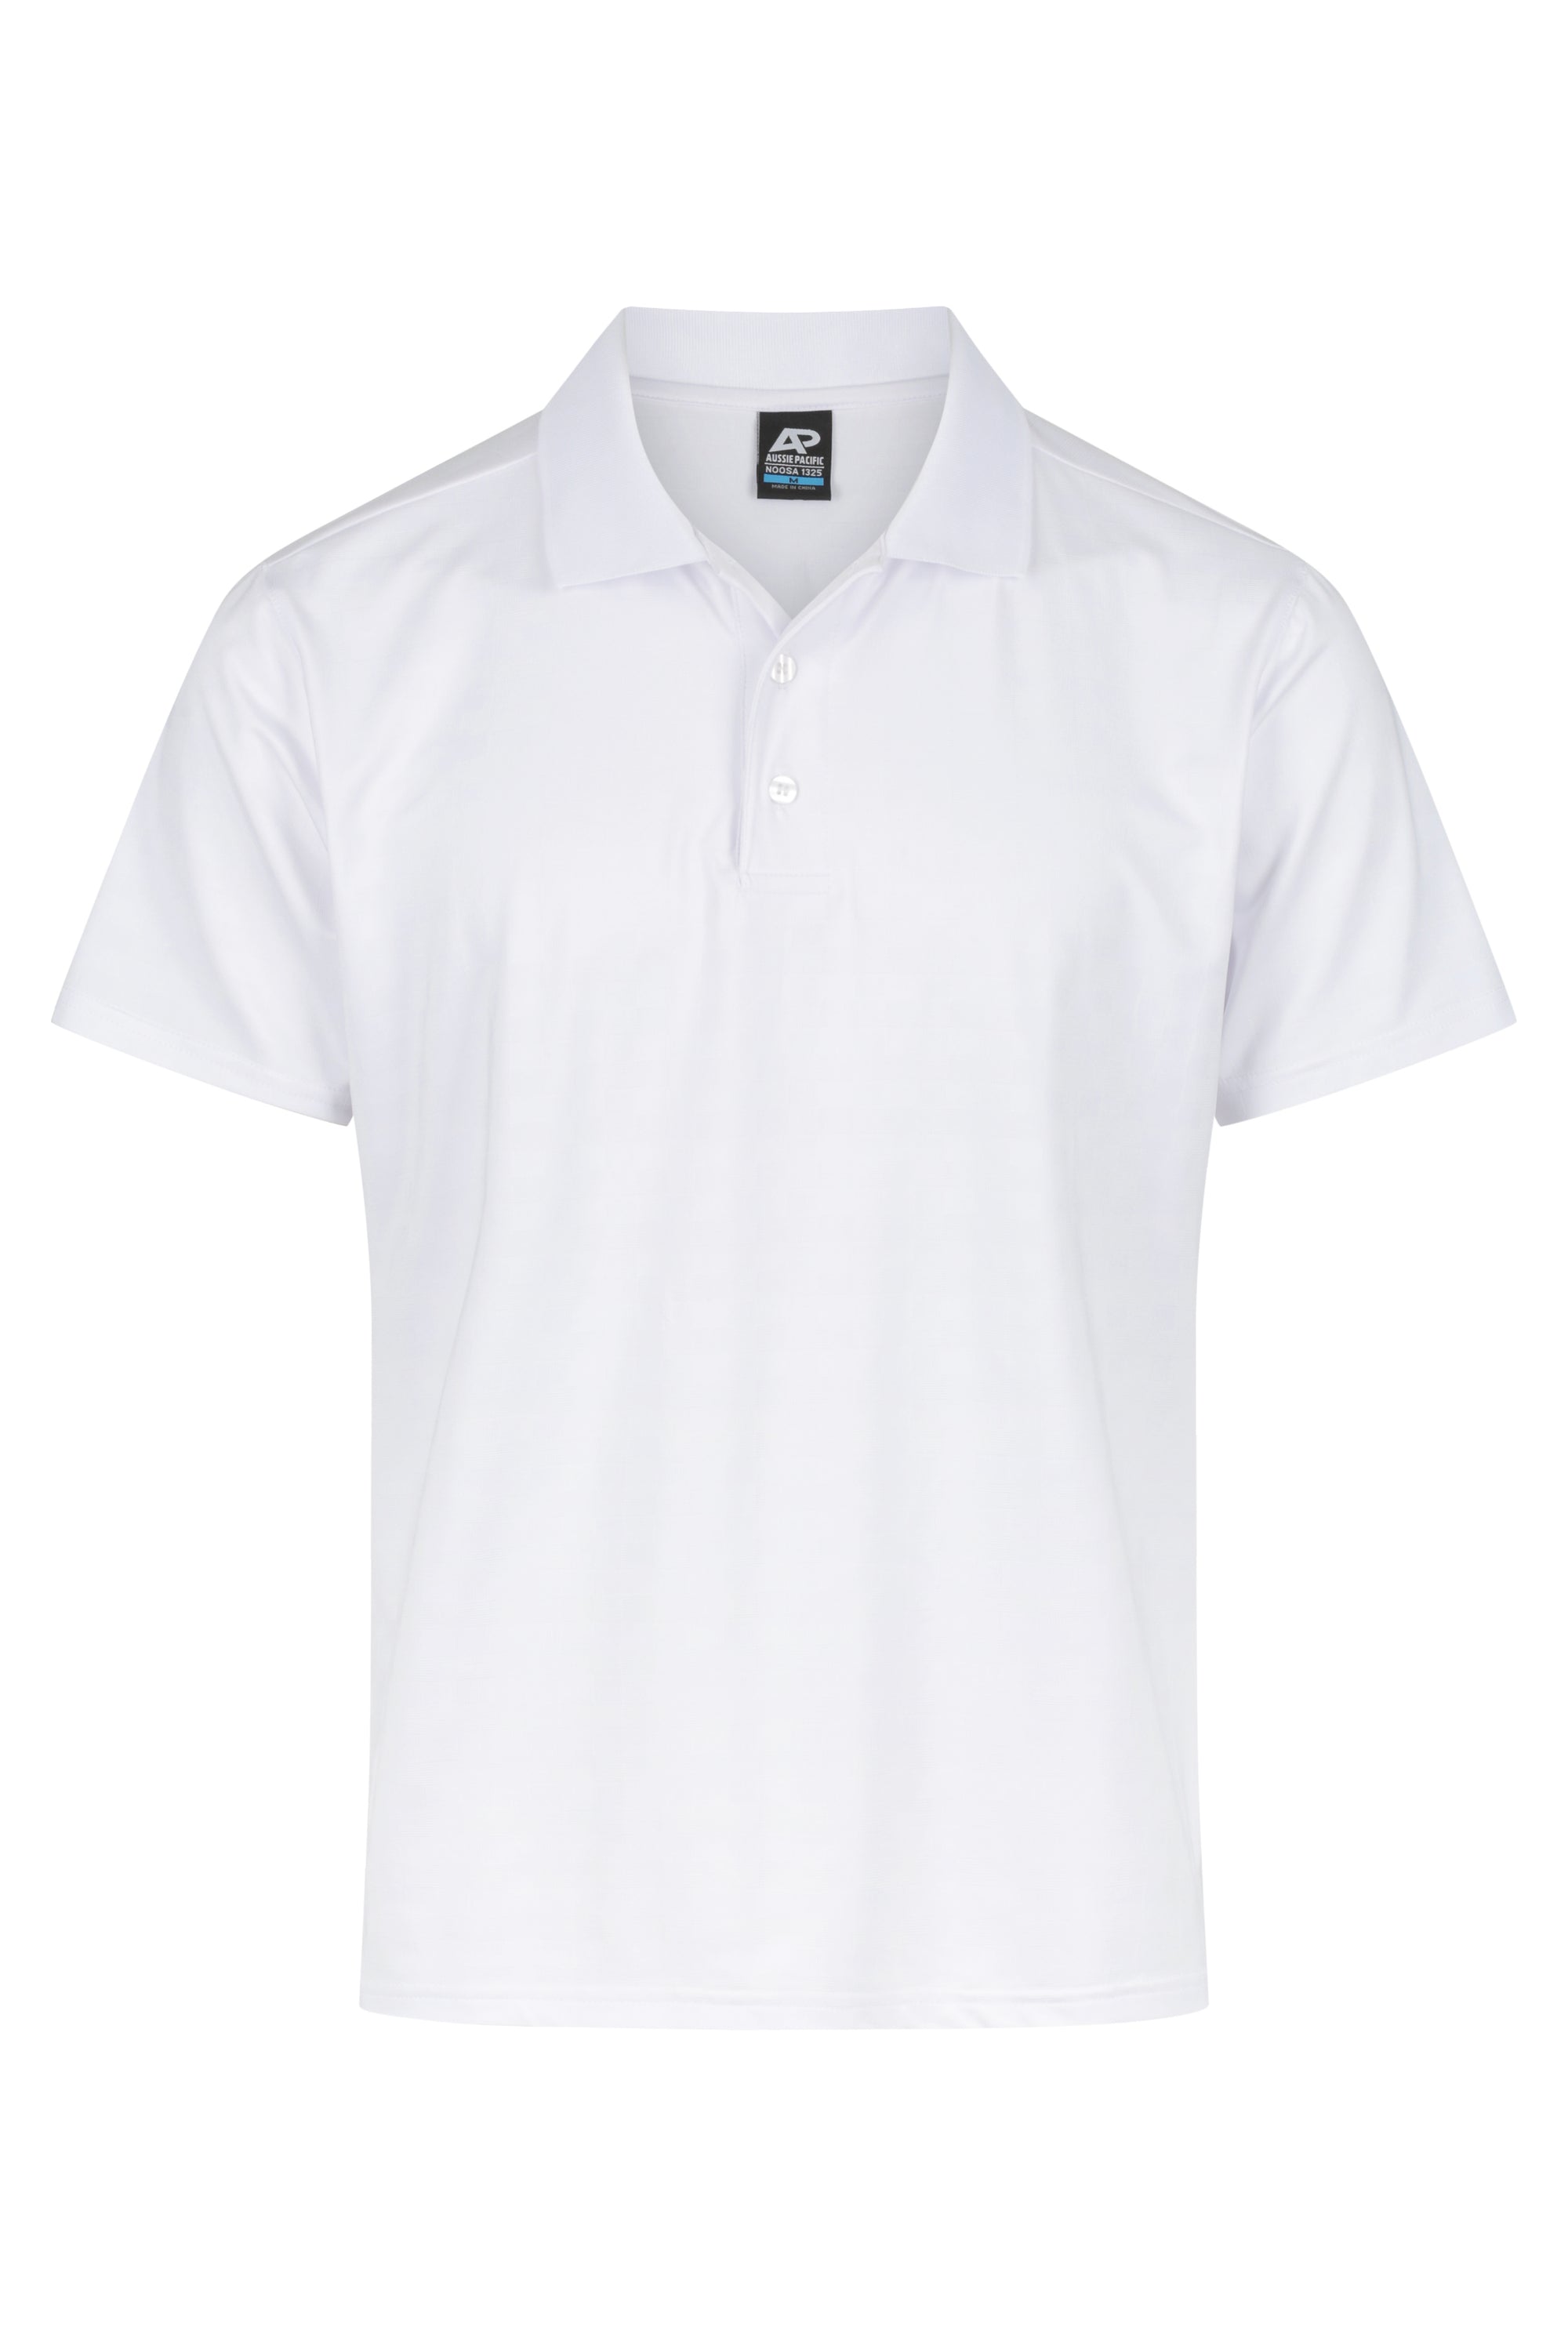 Custom Noosa Workwear Polo Shirts - White